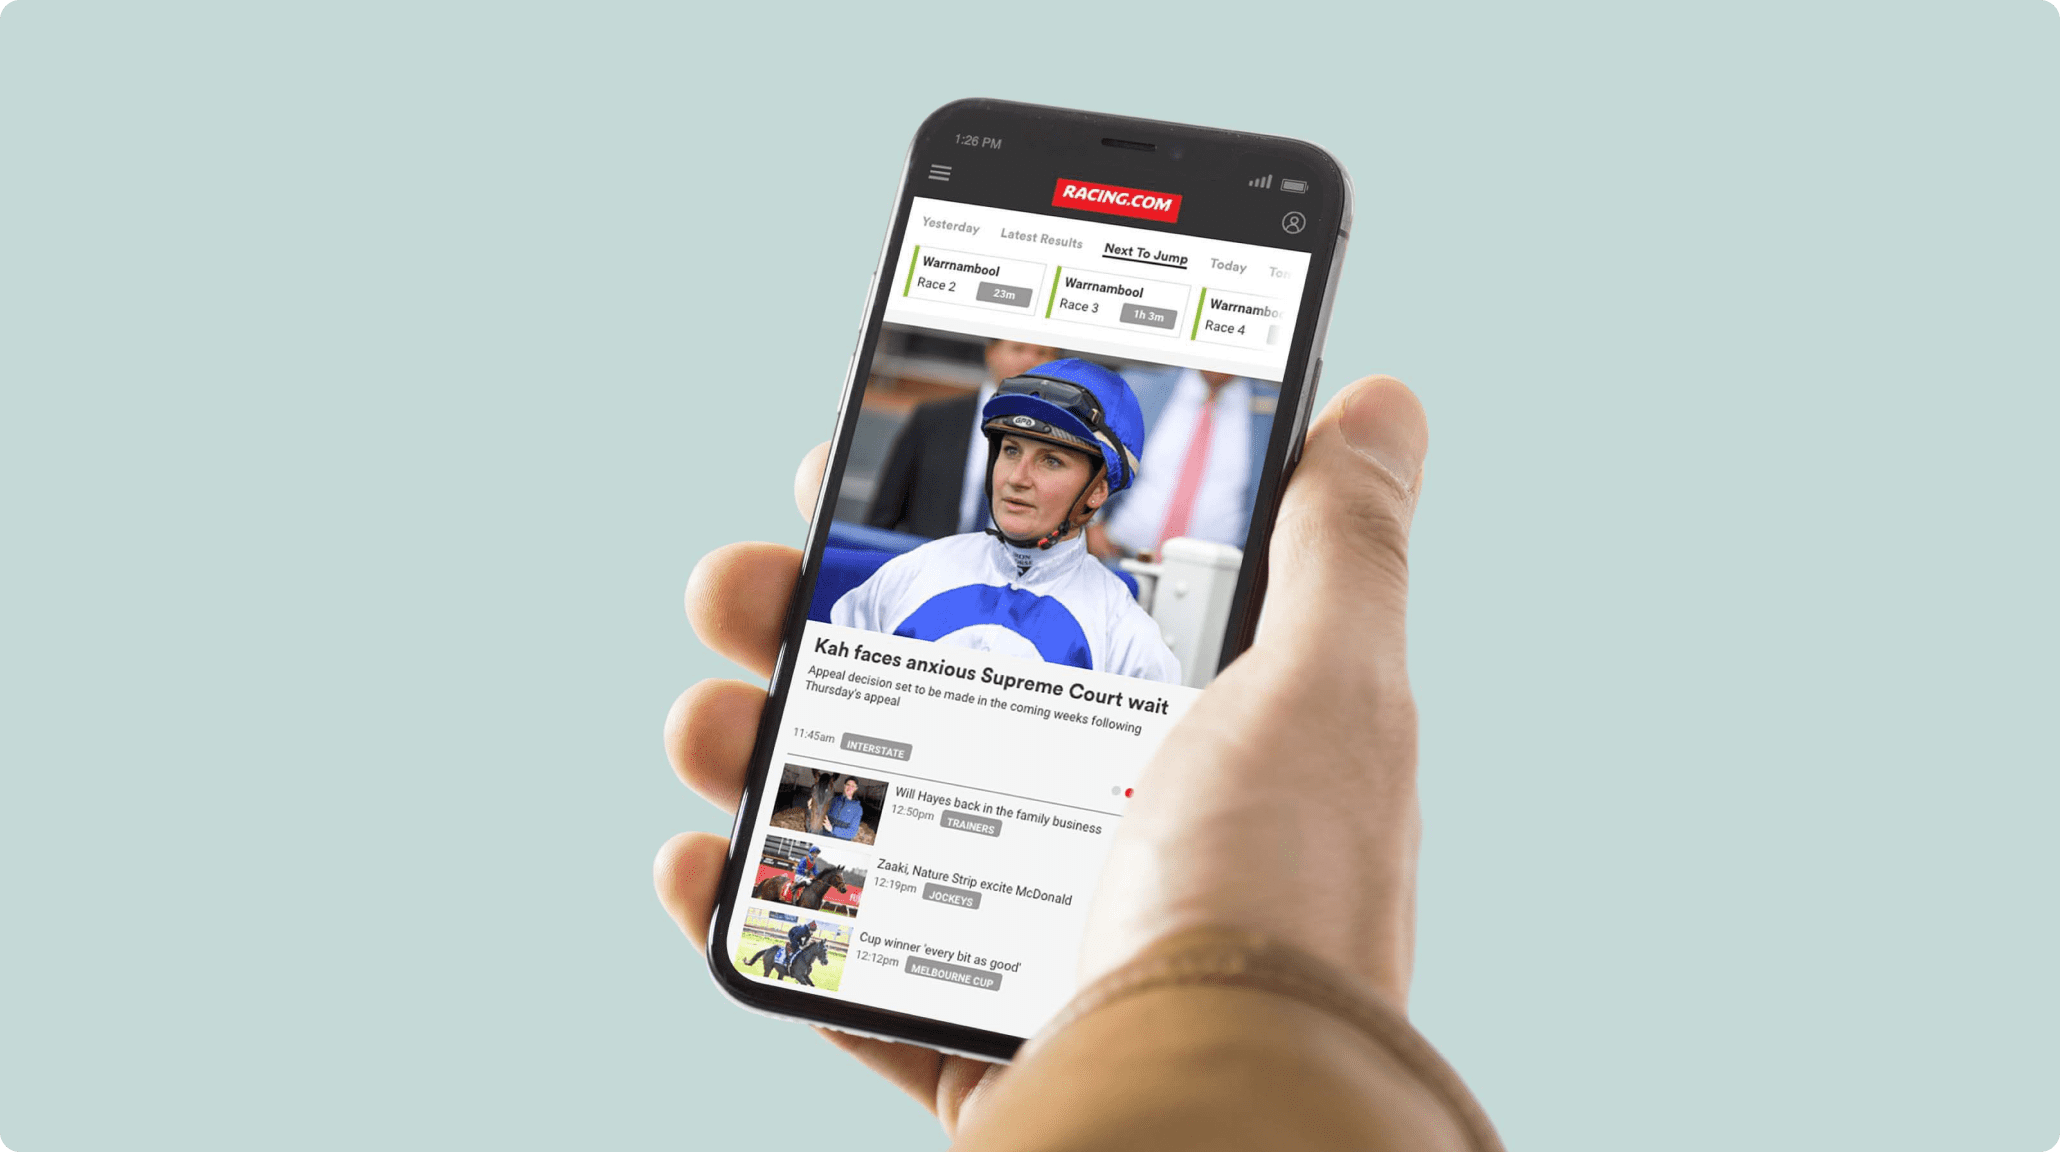 Racing.com mobile app